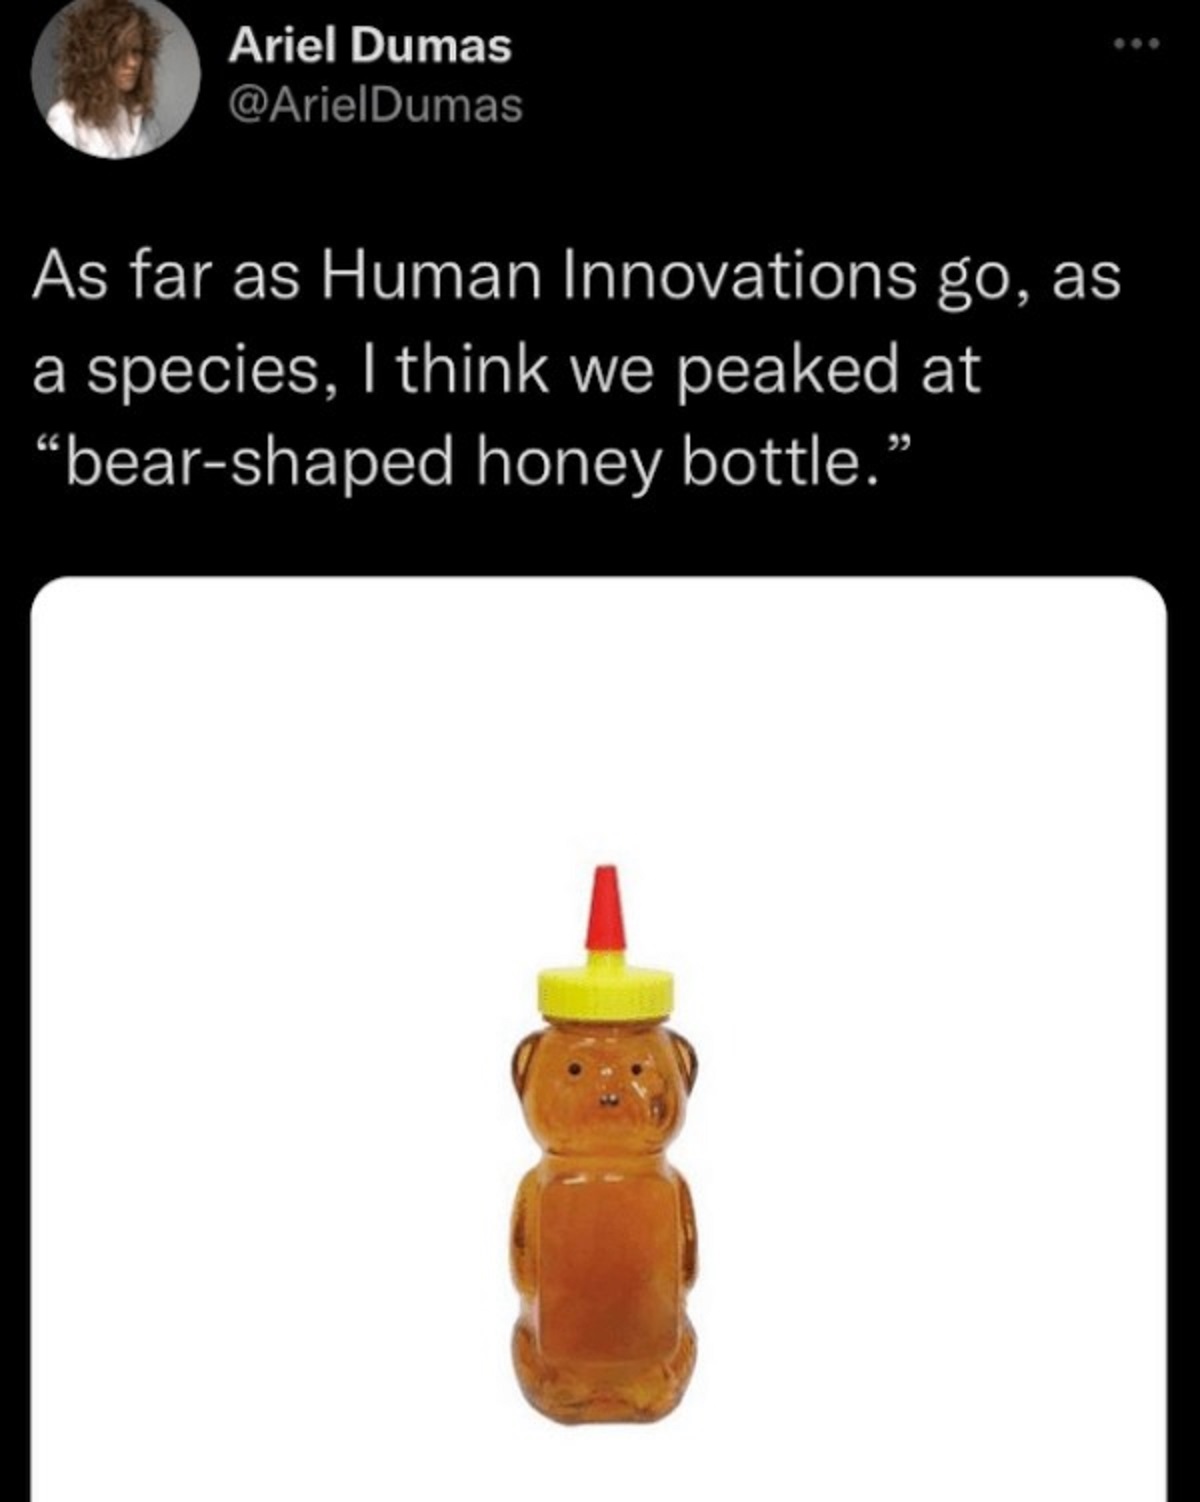 screenshot - Ariel Dumas As far as Human Innovations go, as species, I think we peaked at "bearshaped honey bottle."